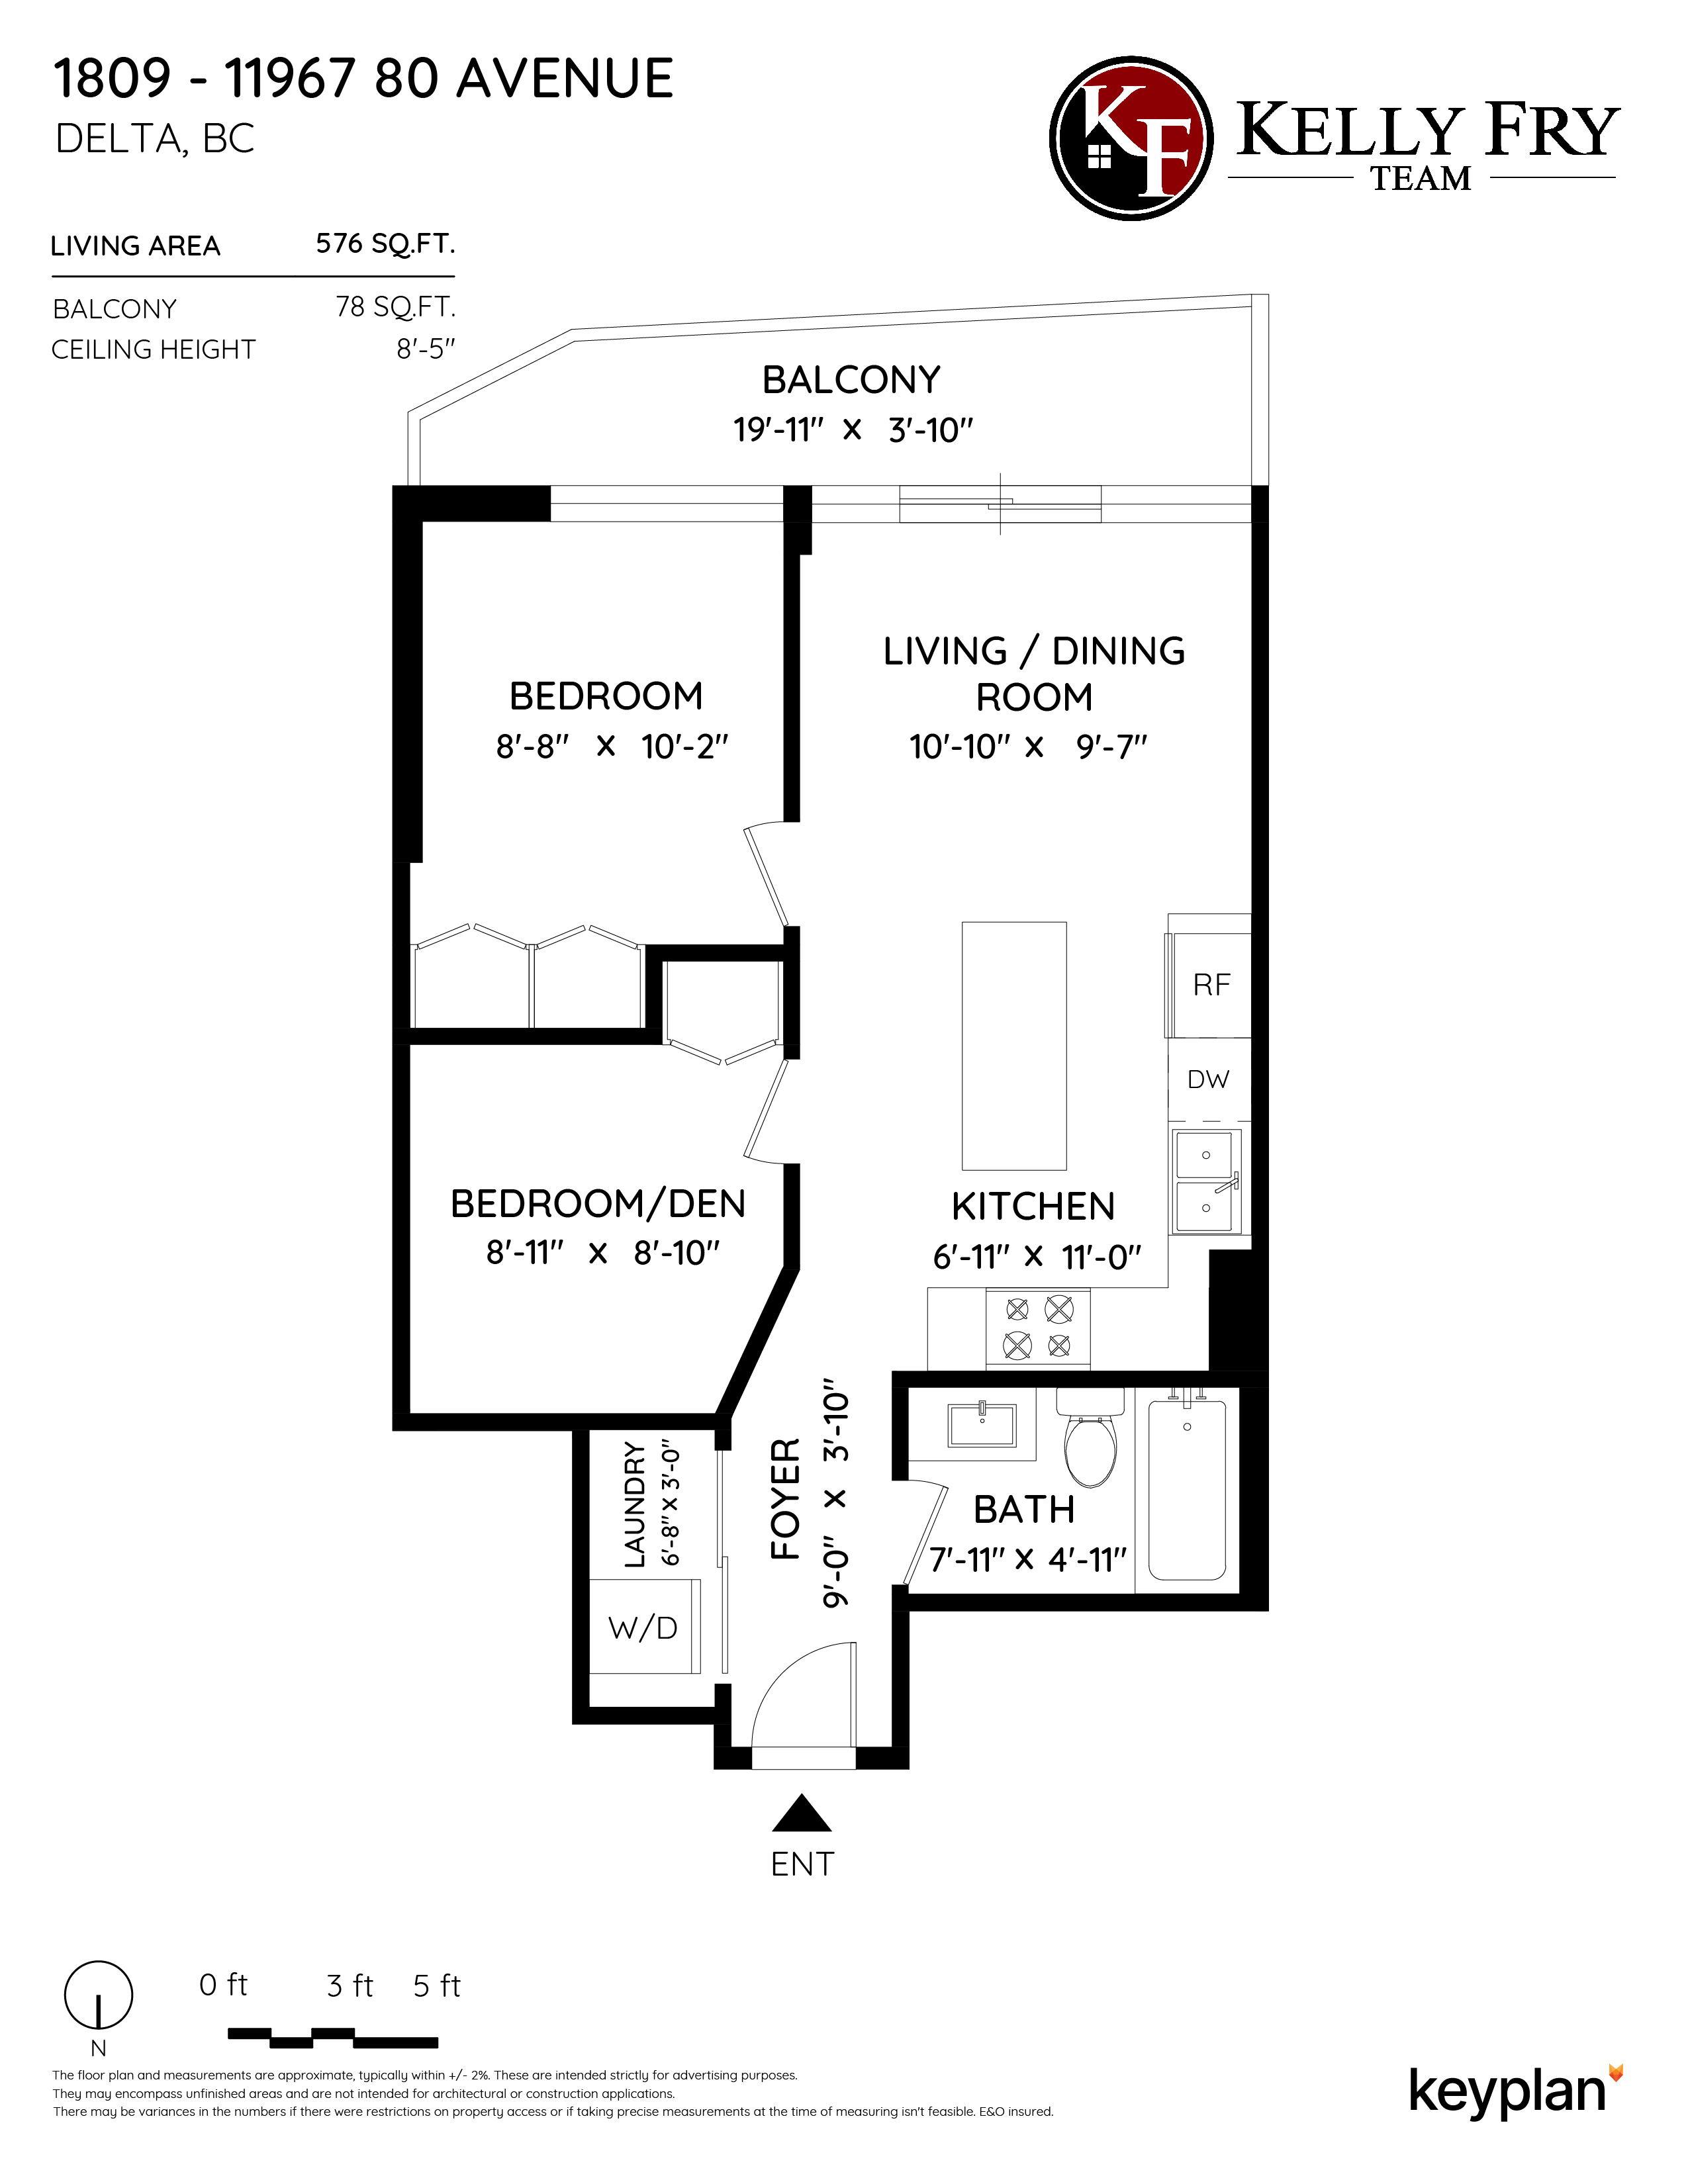 Kelly Fry Team - Unit 1809 - 11967 80 Avenue, Delta, BC, Canada | Floor Plan 1